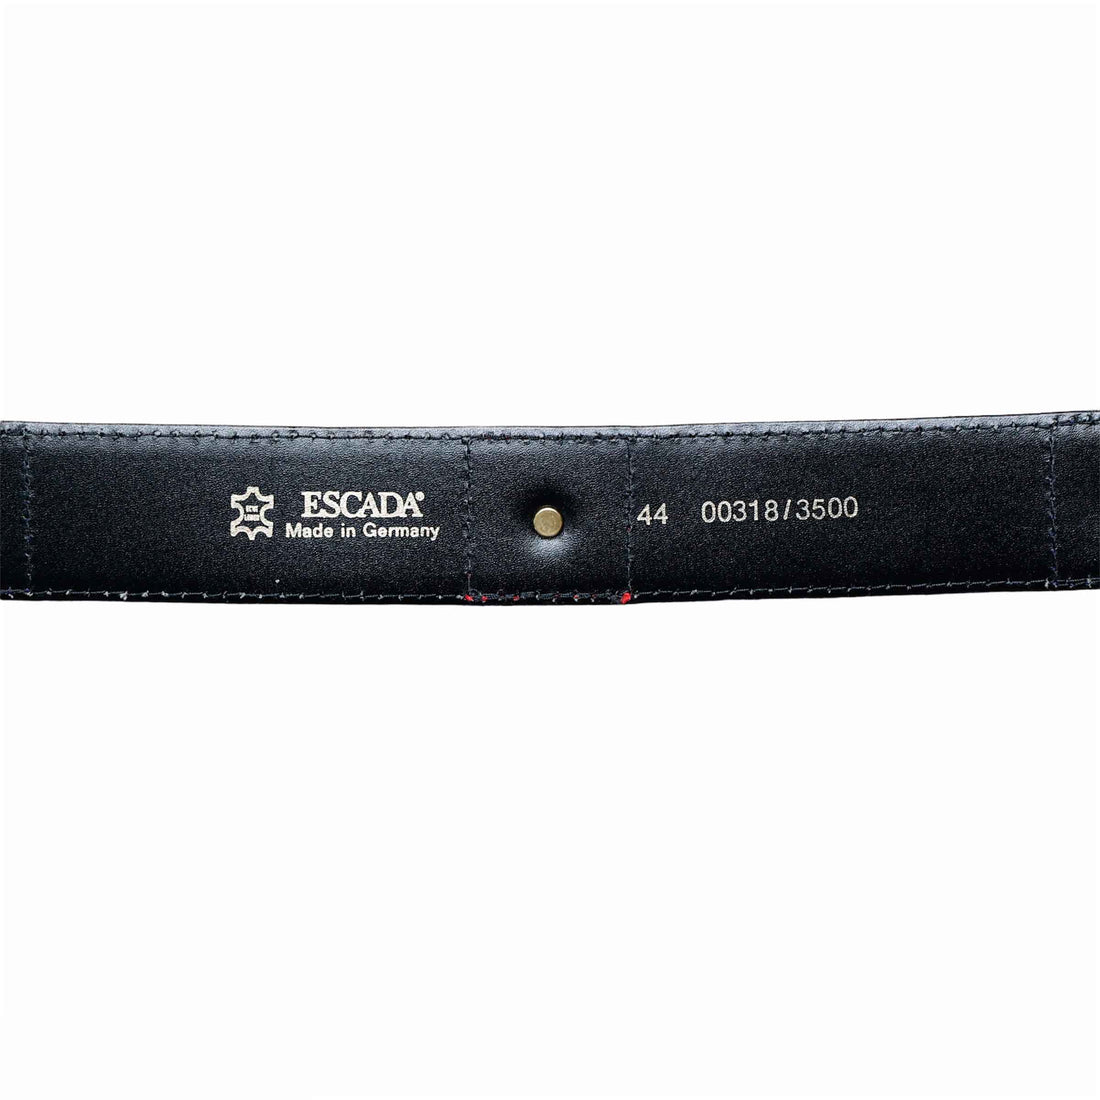 Escada vintage belt with signature hardware